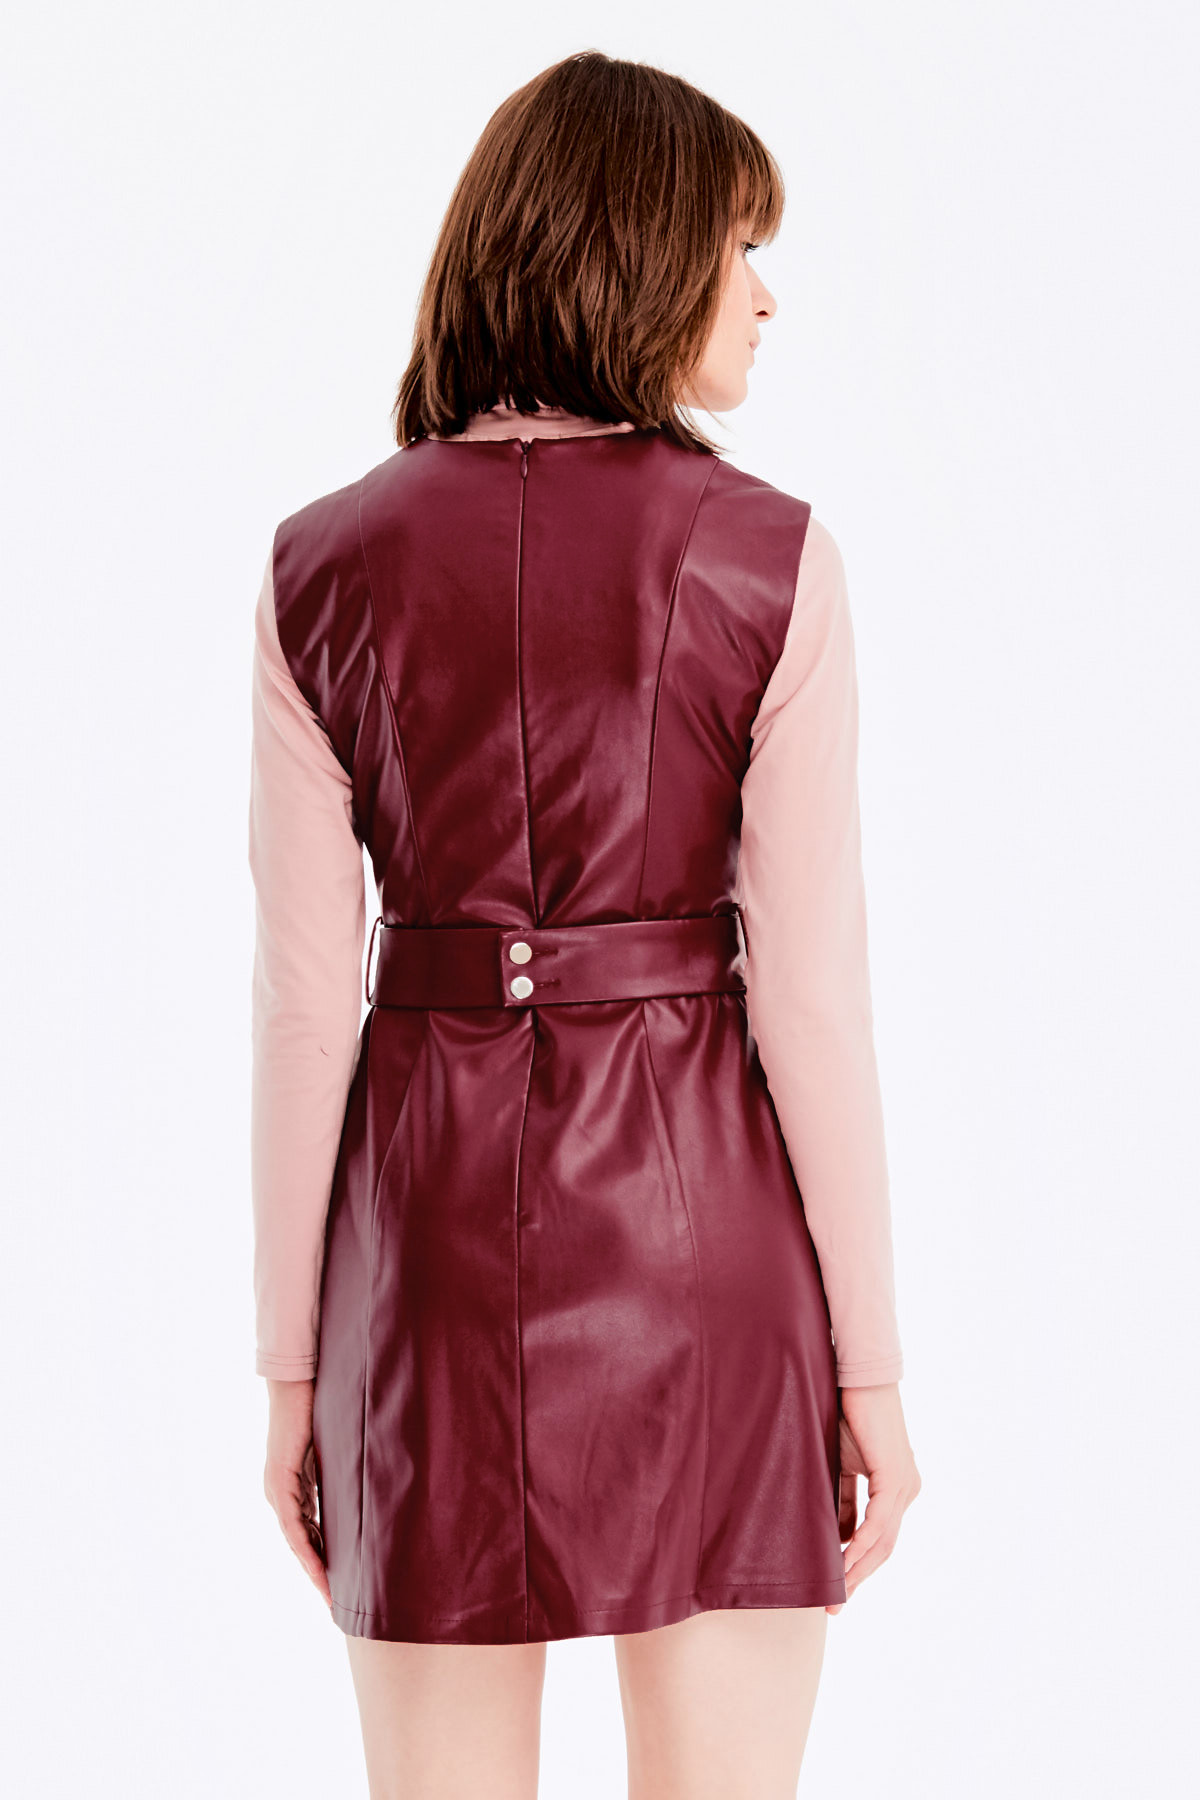 Below-knee burgundy leather dress , photo 13